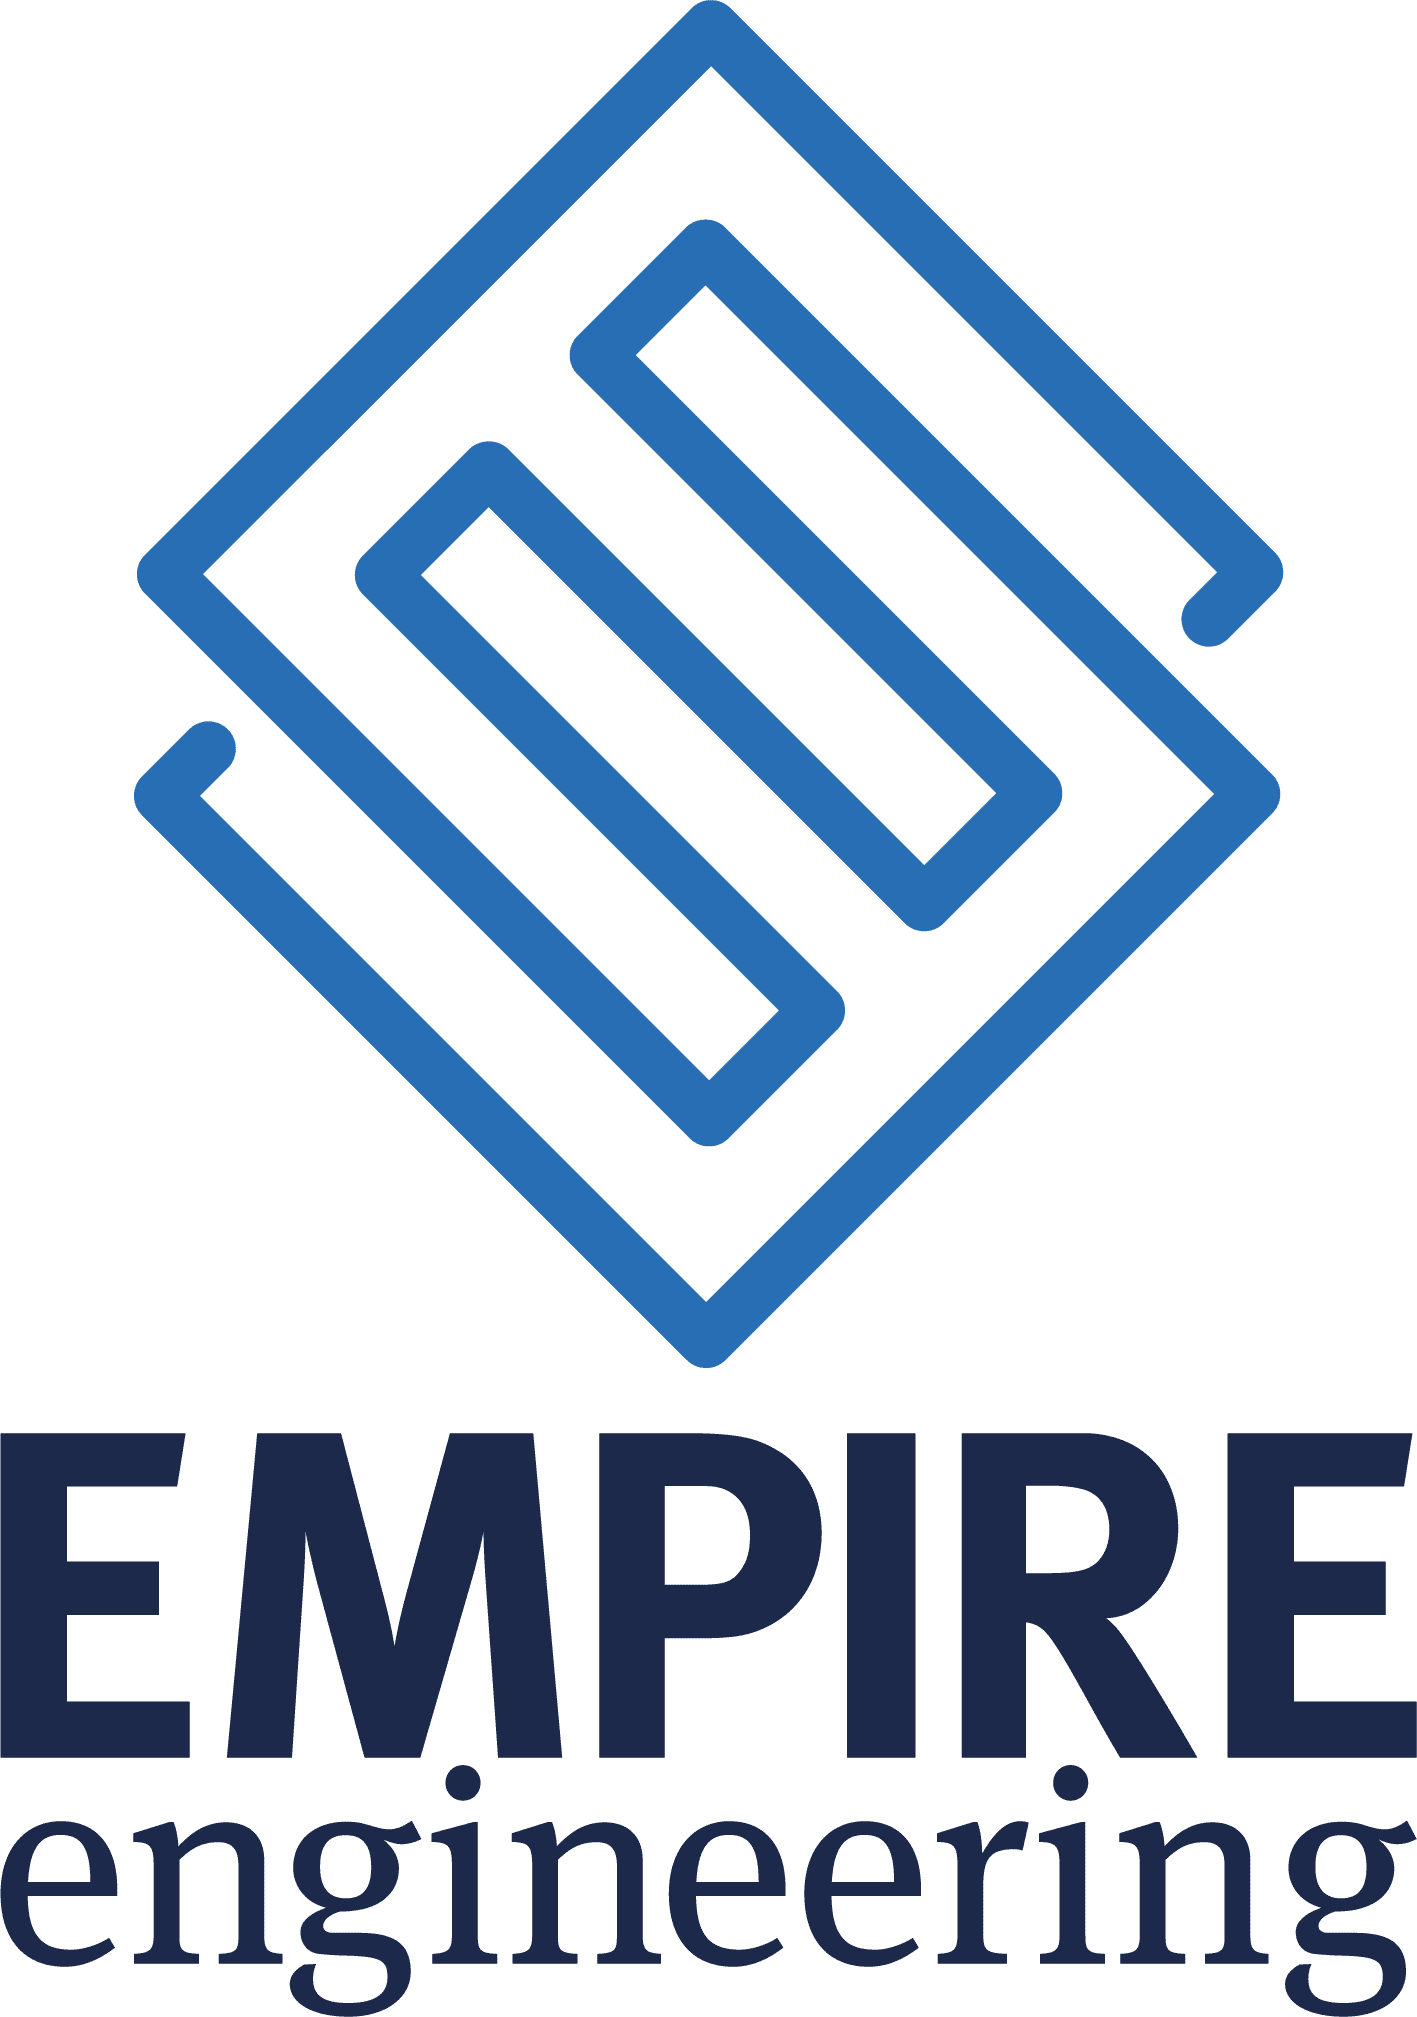 Foundation Ex 2020 Empire Engineering